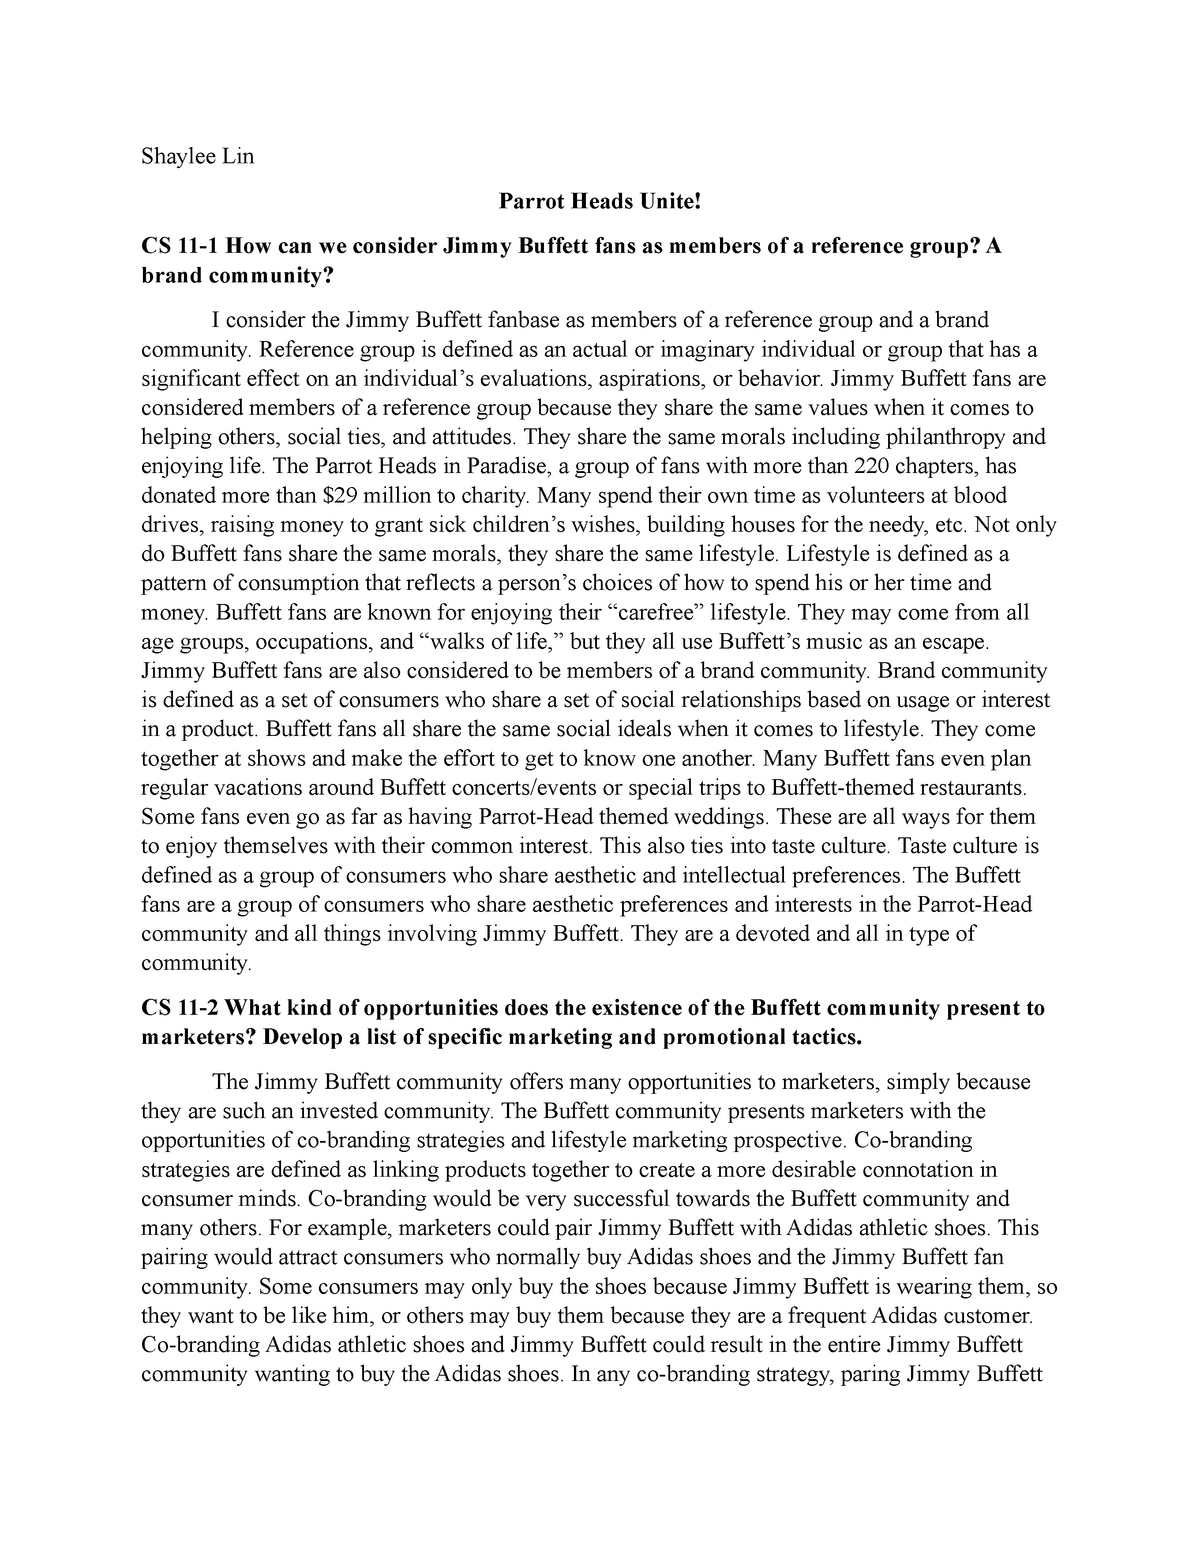 MKTG 3360 Case Study Chapter 11 - Shaylee Lin Parrot Heads Unite! CS 11 ...